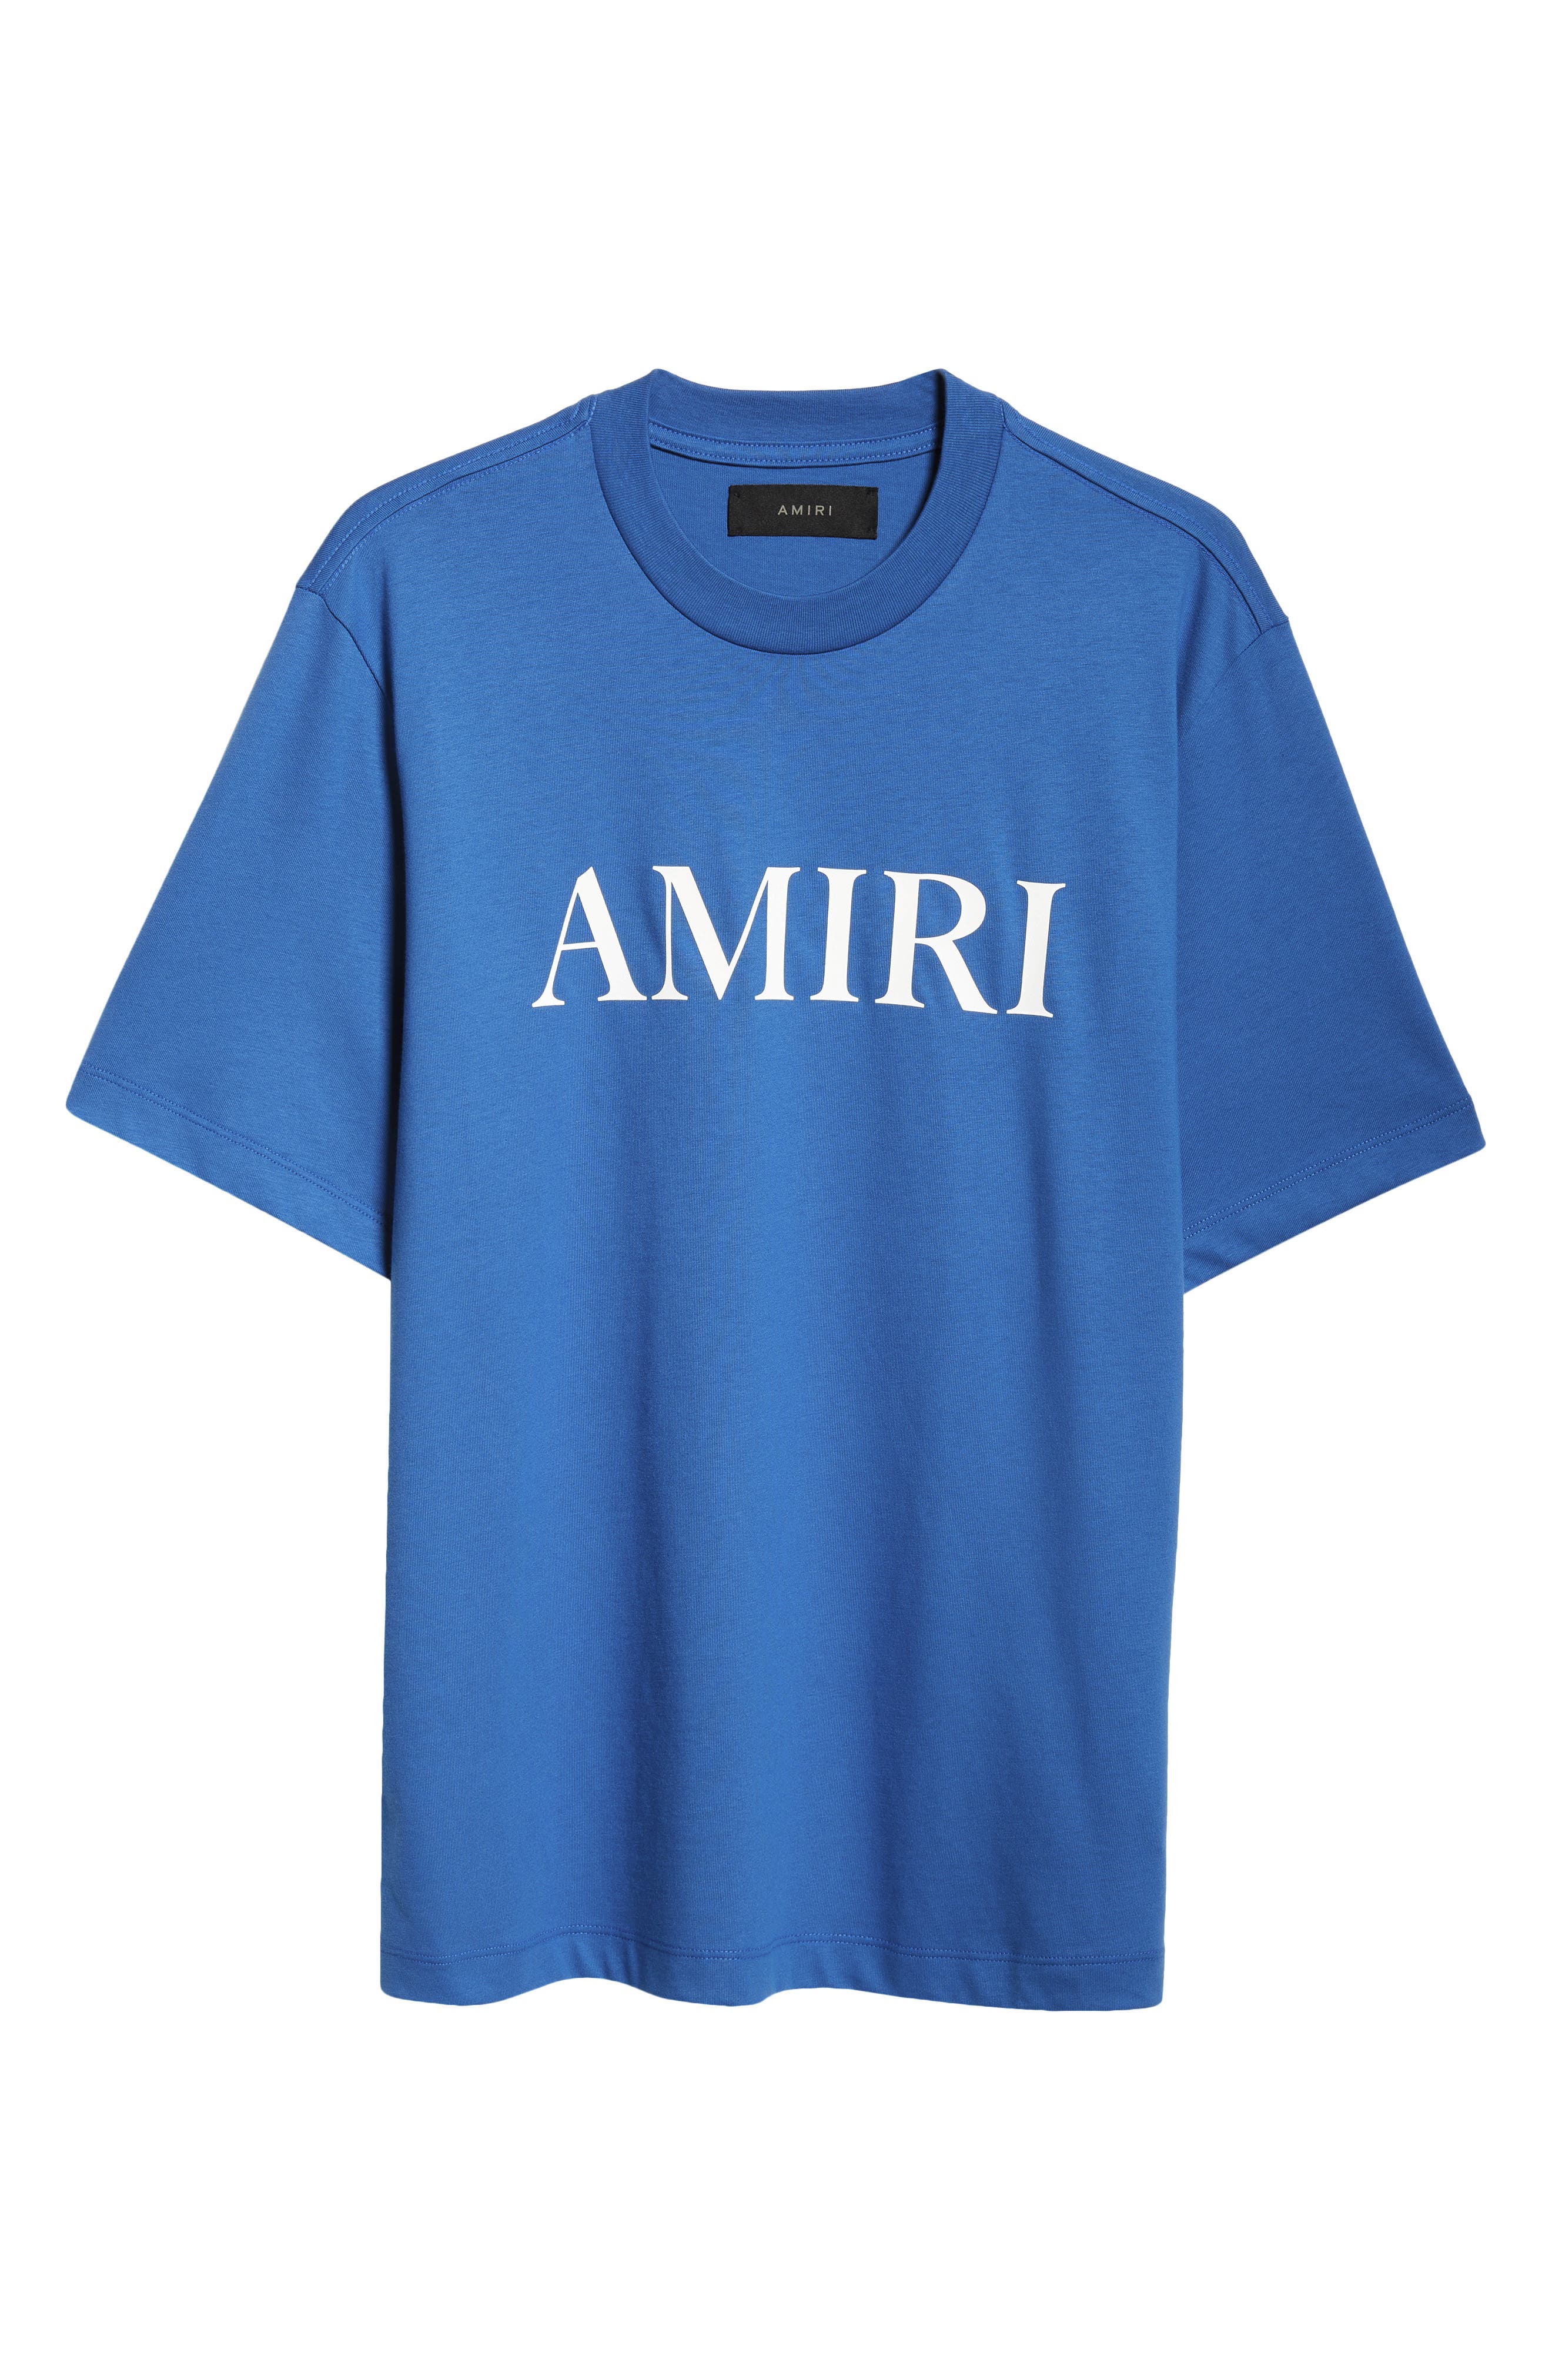 Shop Blue AMIRI Online | Nordstrom